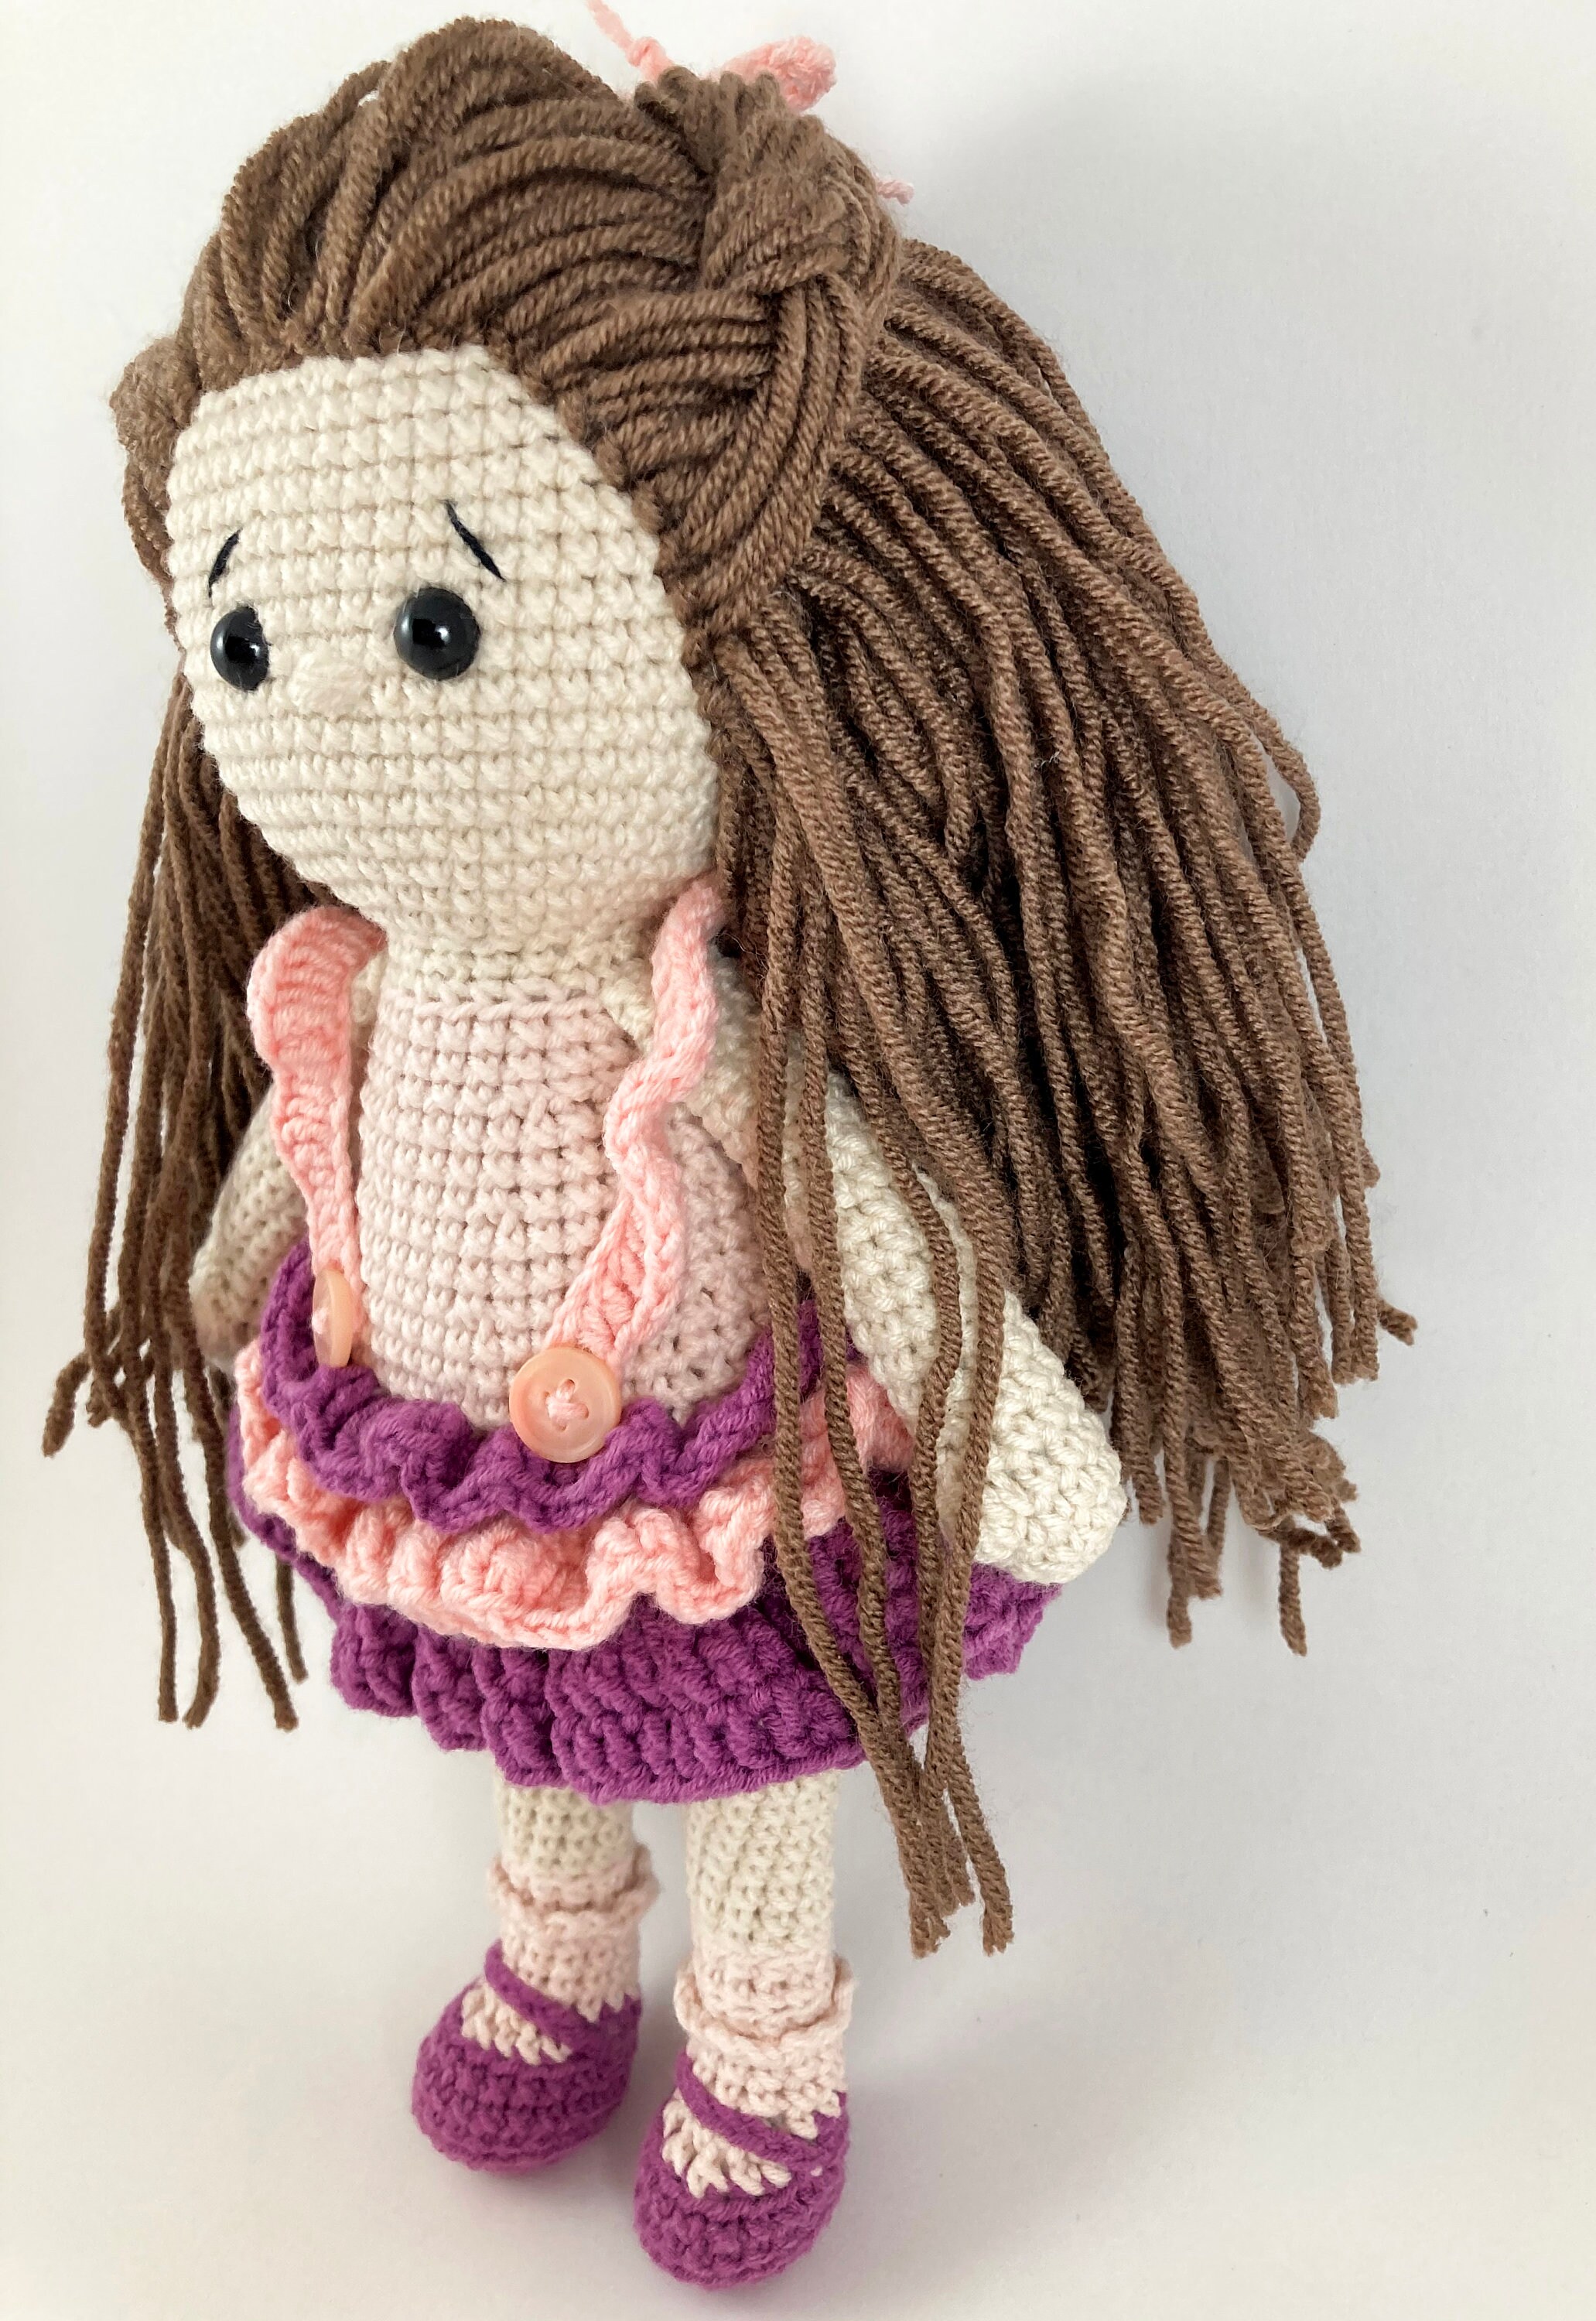 Crochet Doll Amigurumi Knitted Doll Amigurumi Knitted Baby | Etsy